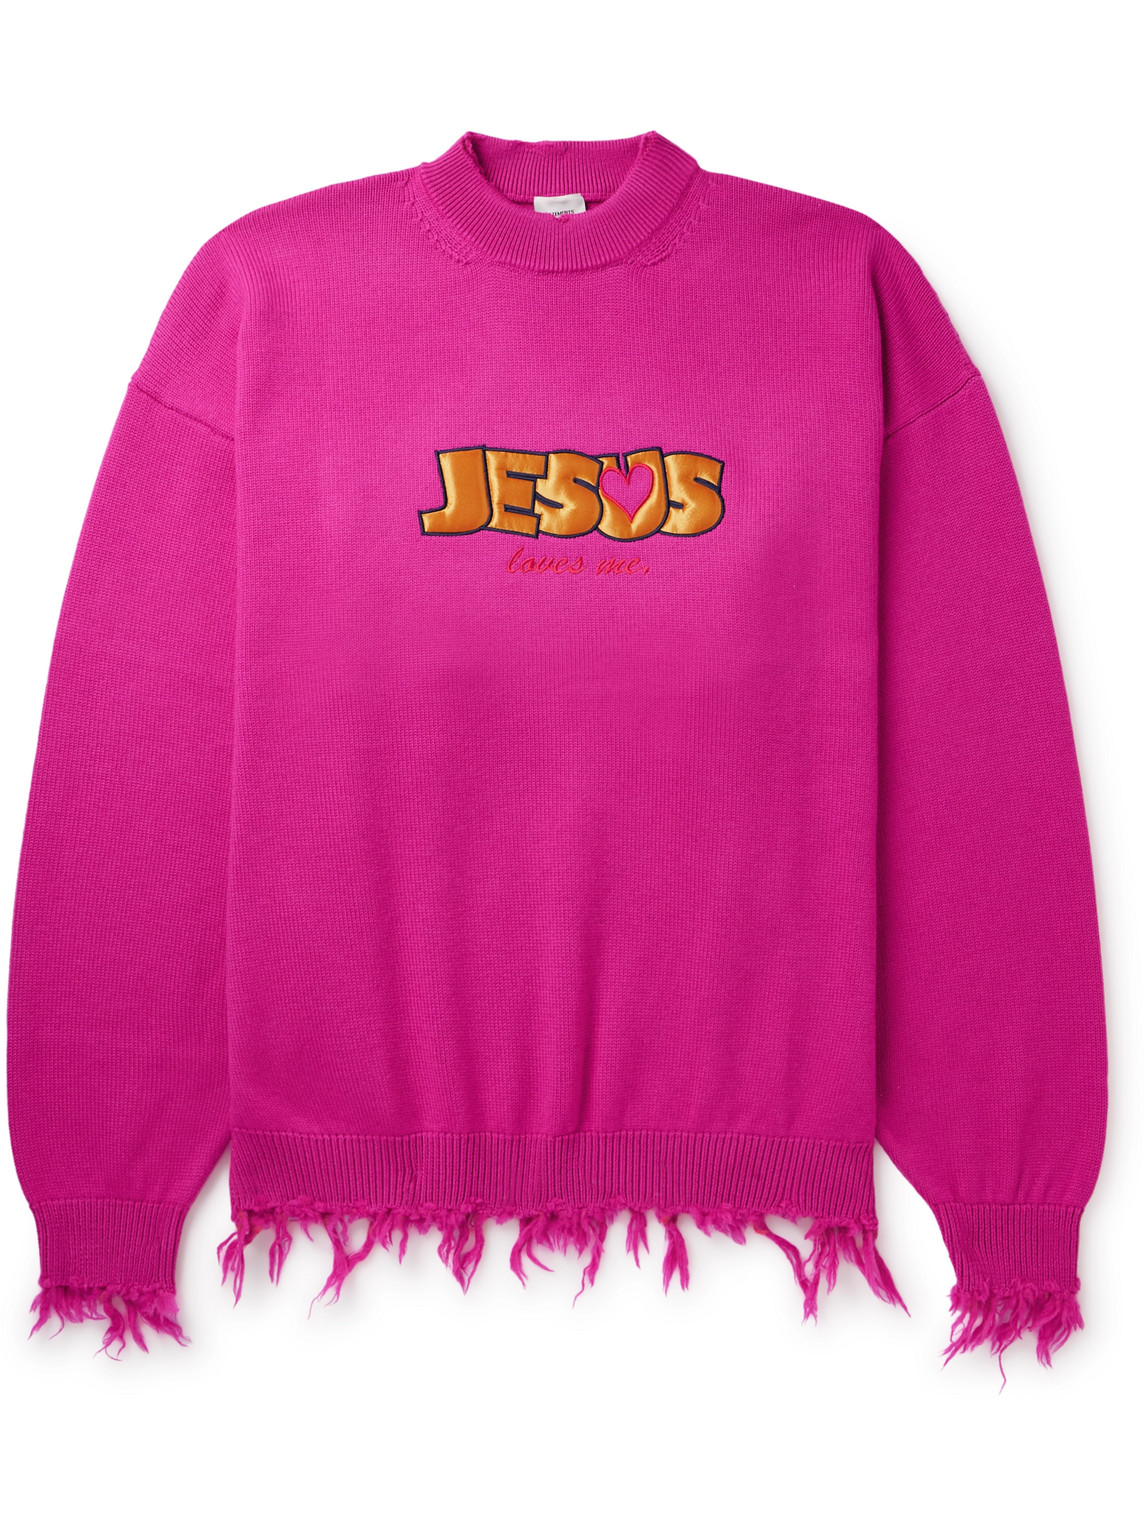 VETEMENTS - Jesus Loves You Distressed Merino Wool Sweater - Men - Pink - L von VETEMENTS